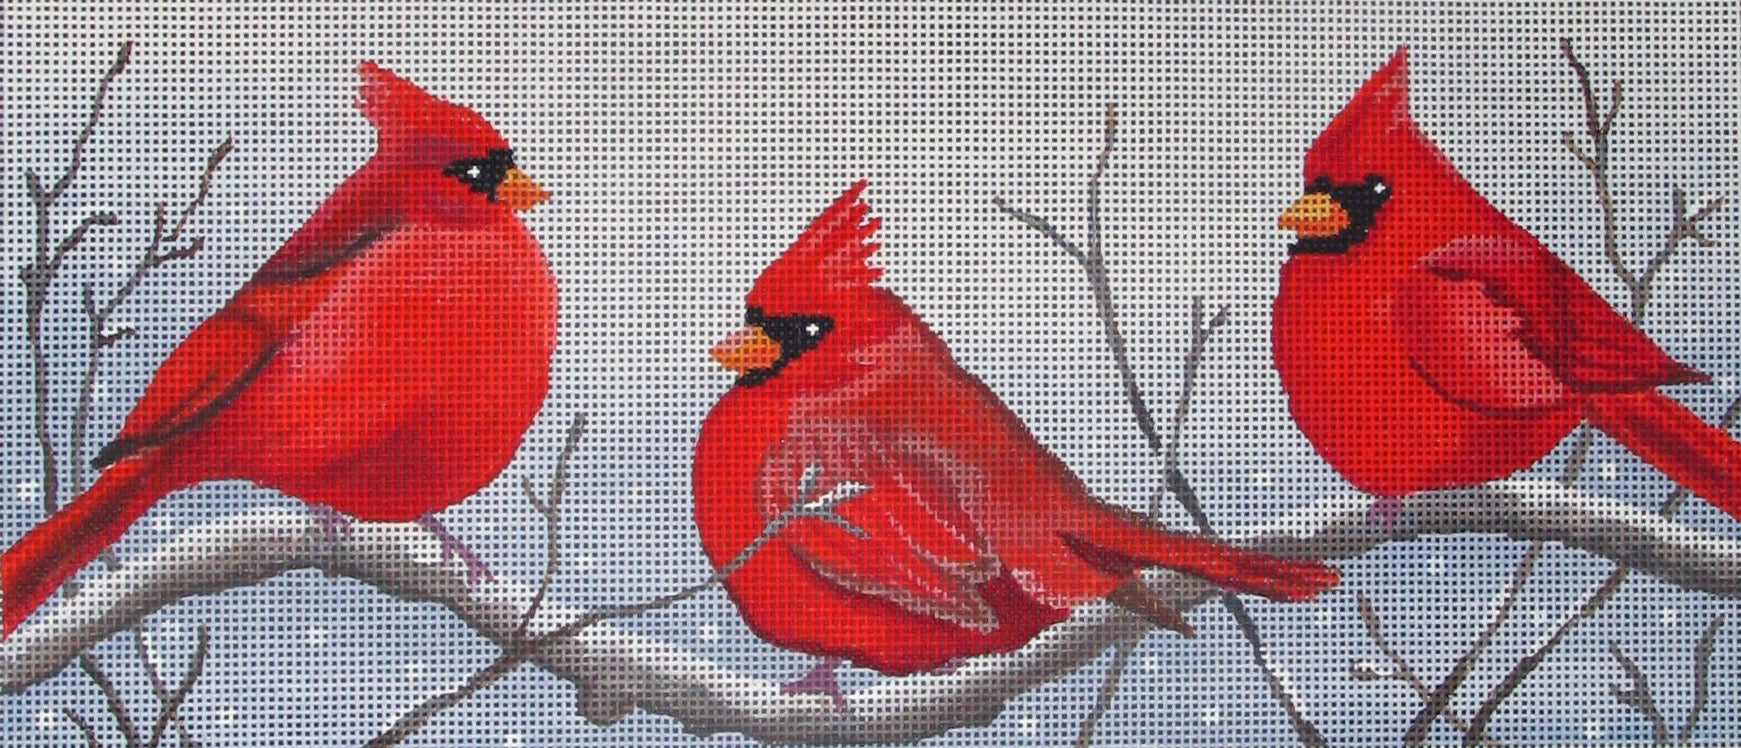 26047 - Three Cardinals in Snow